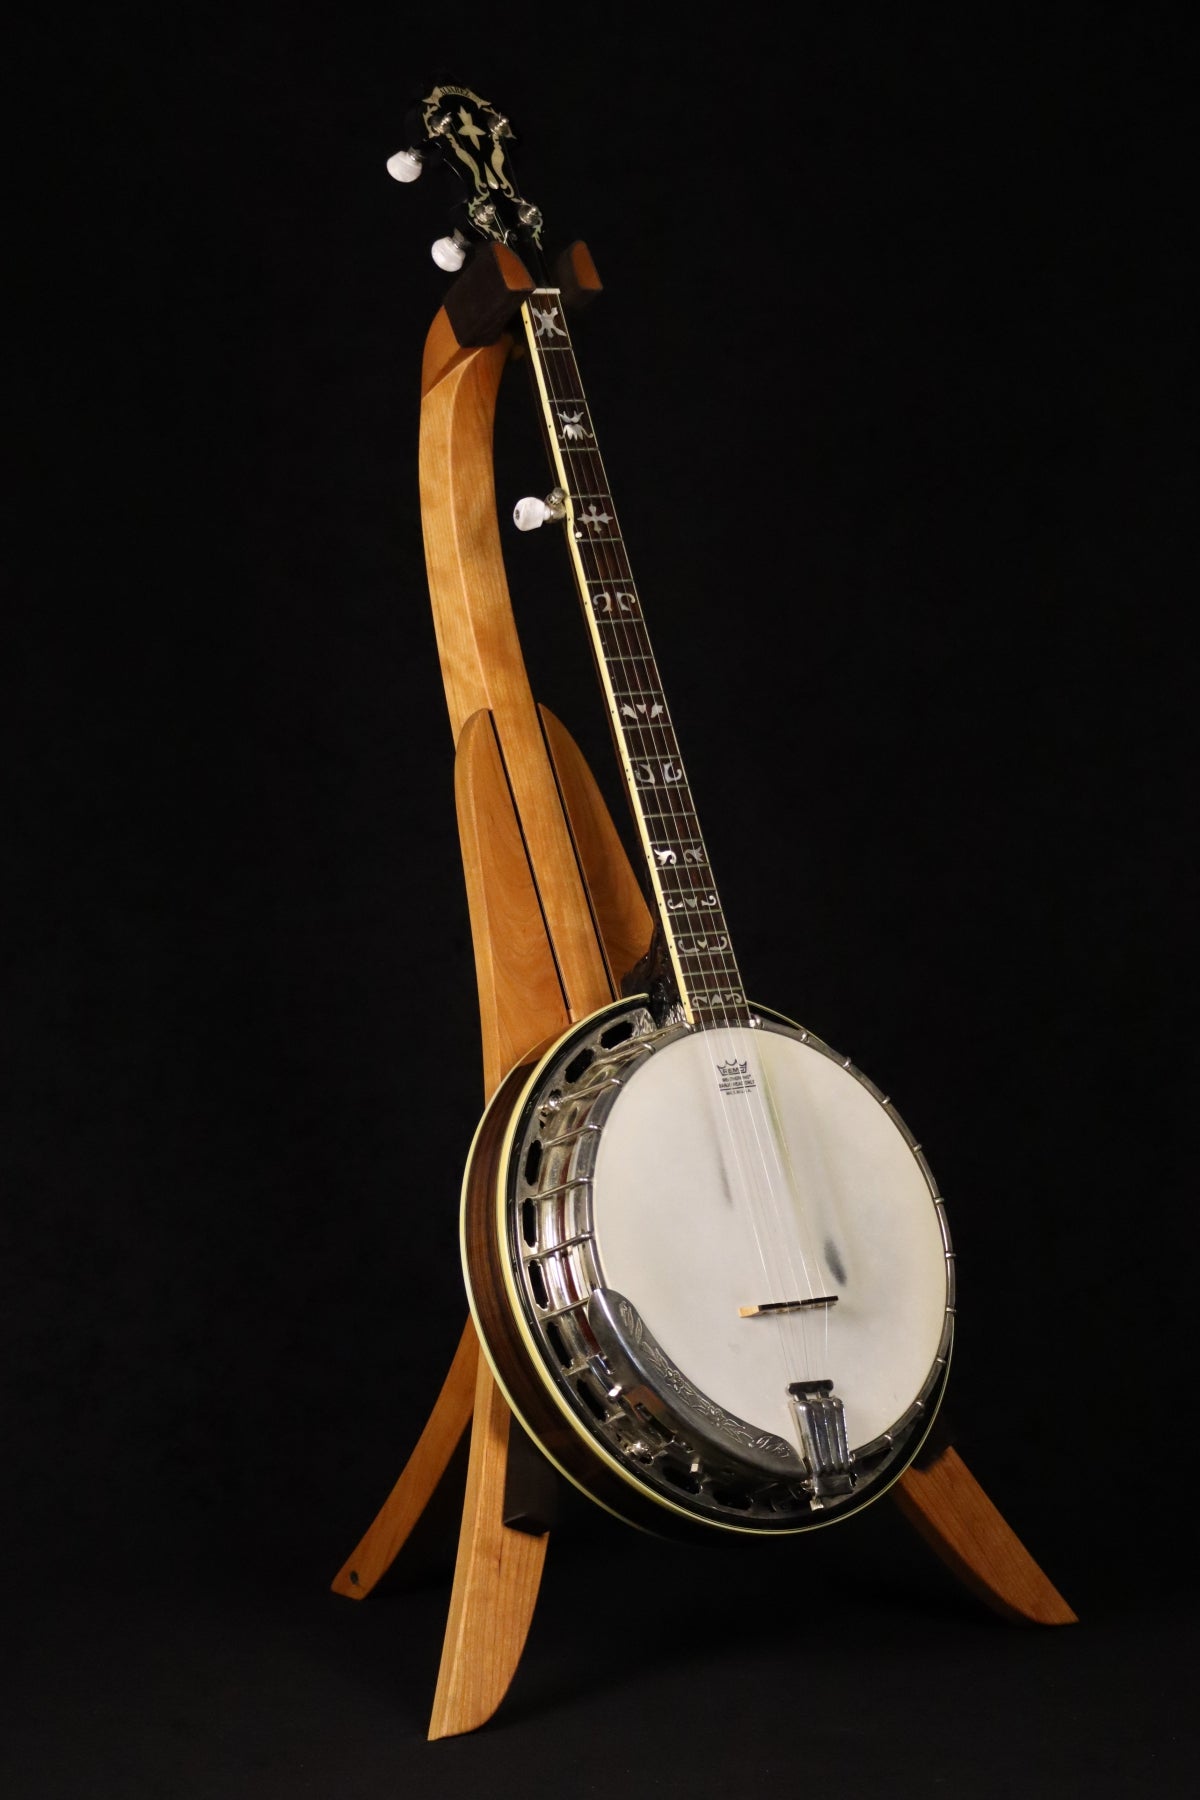 Folding cherry wood banjo floor stand full front image with Alvarez banjo